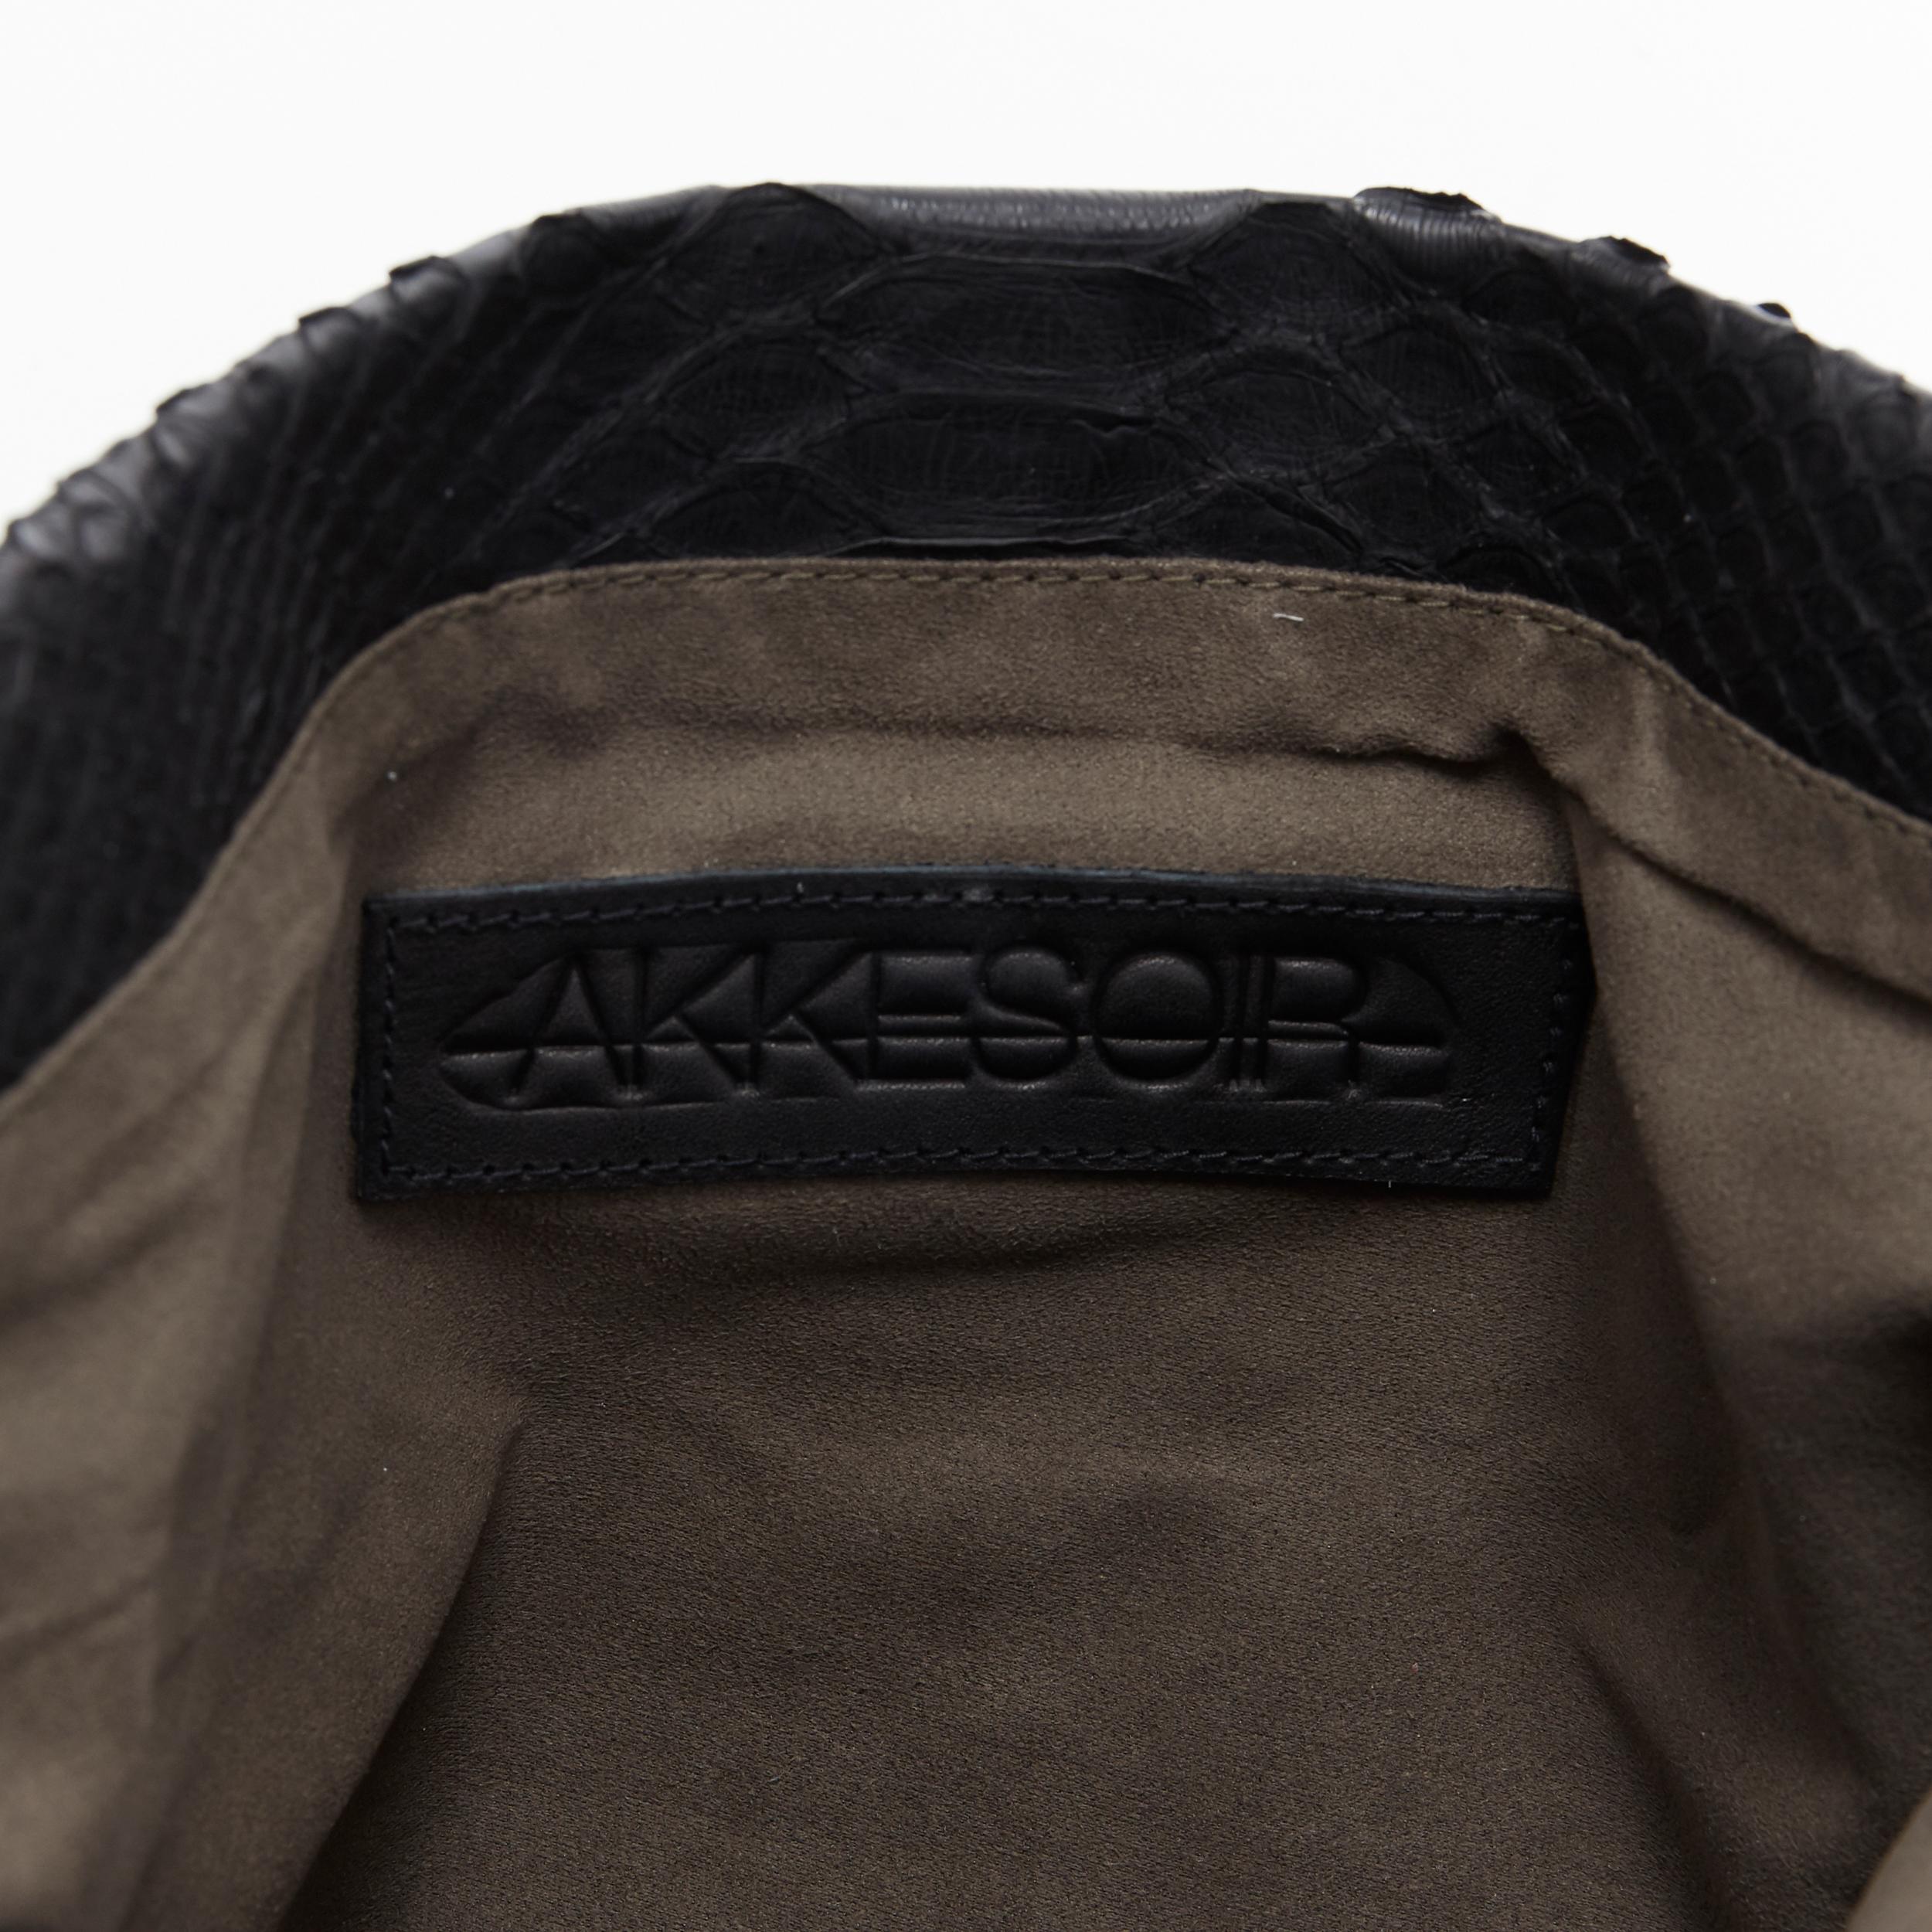 AKKESOIR black genuine scaled leather foldover rectangular clutch bag ...